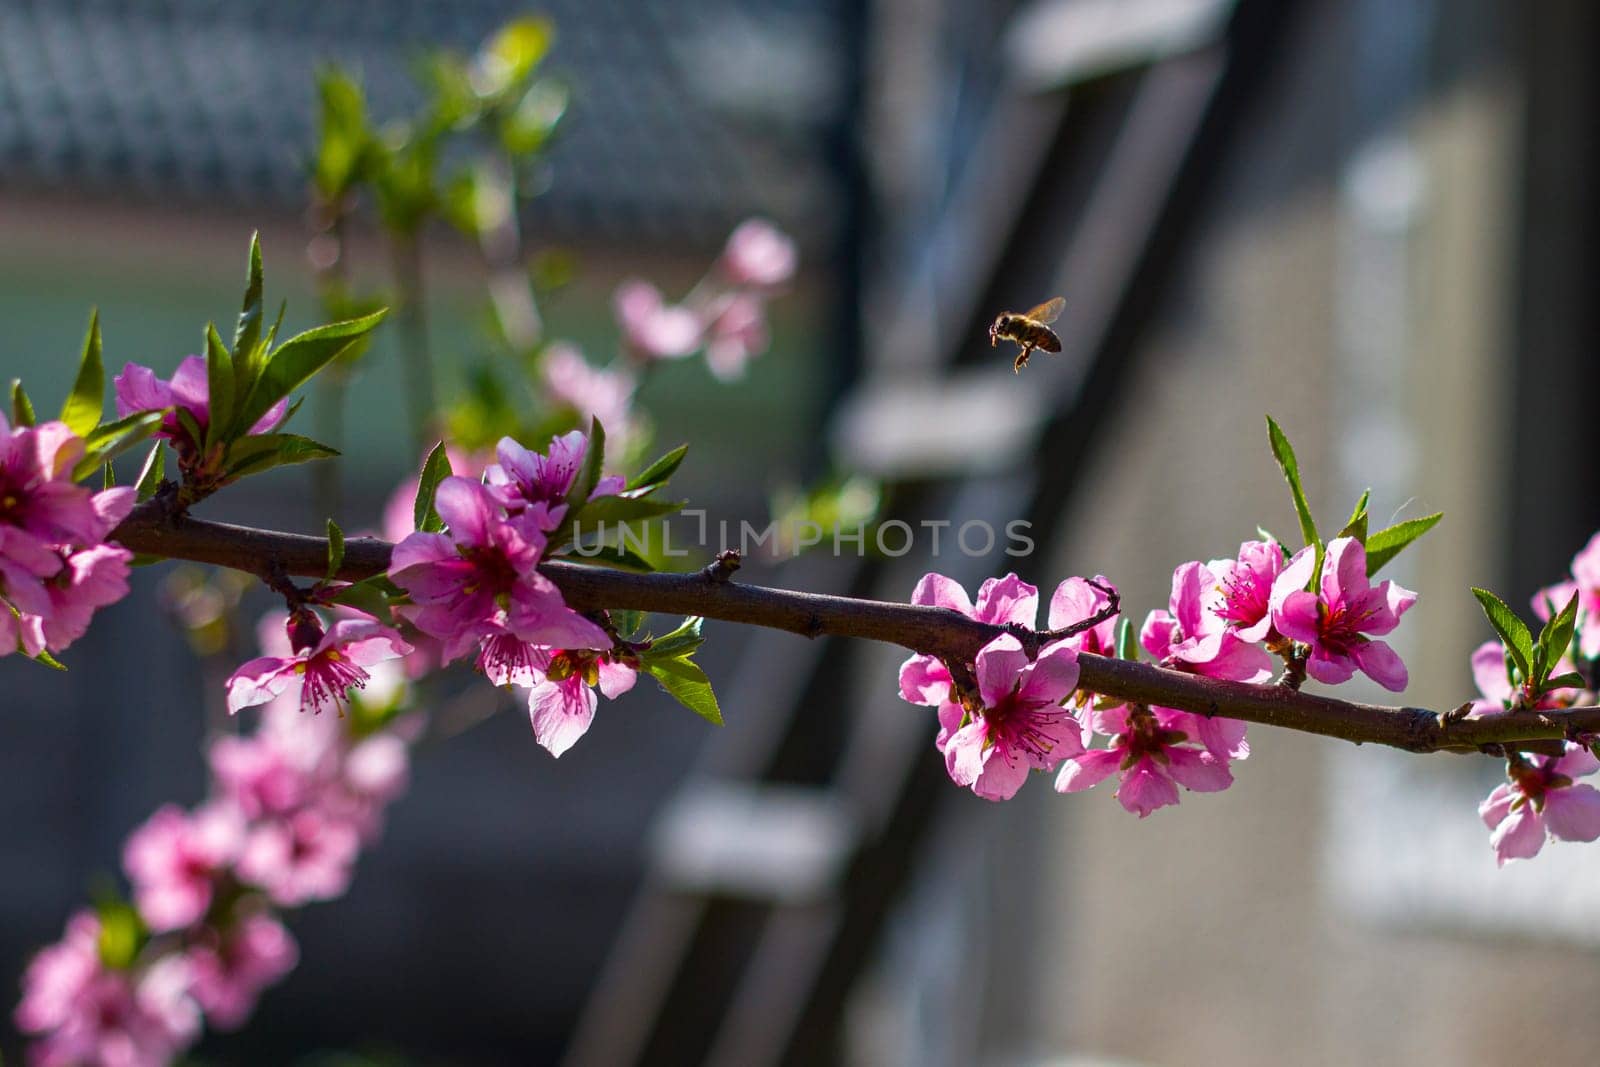 Bee pollinates nectarine peach blossom flower. Agriculture beautiful season farming springtime landscape